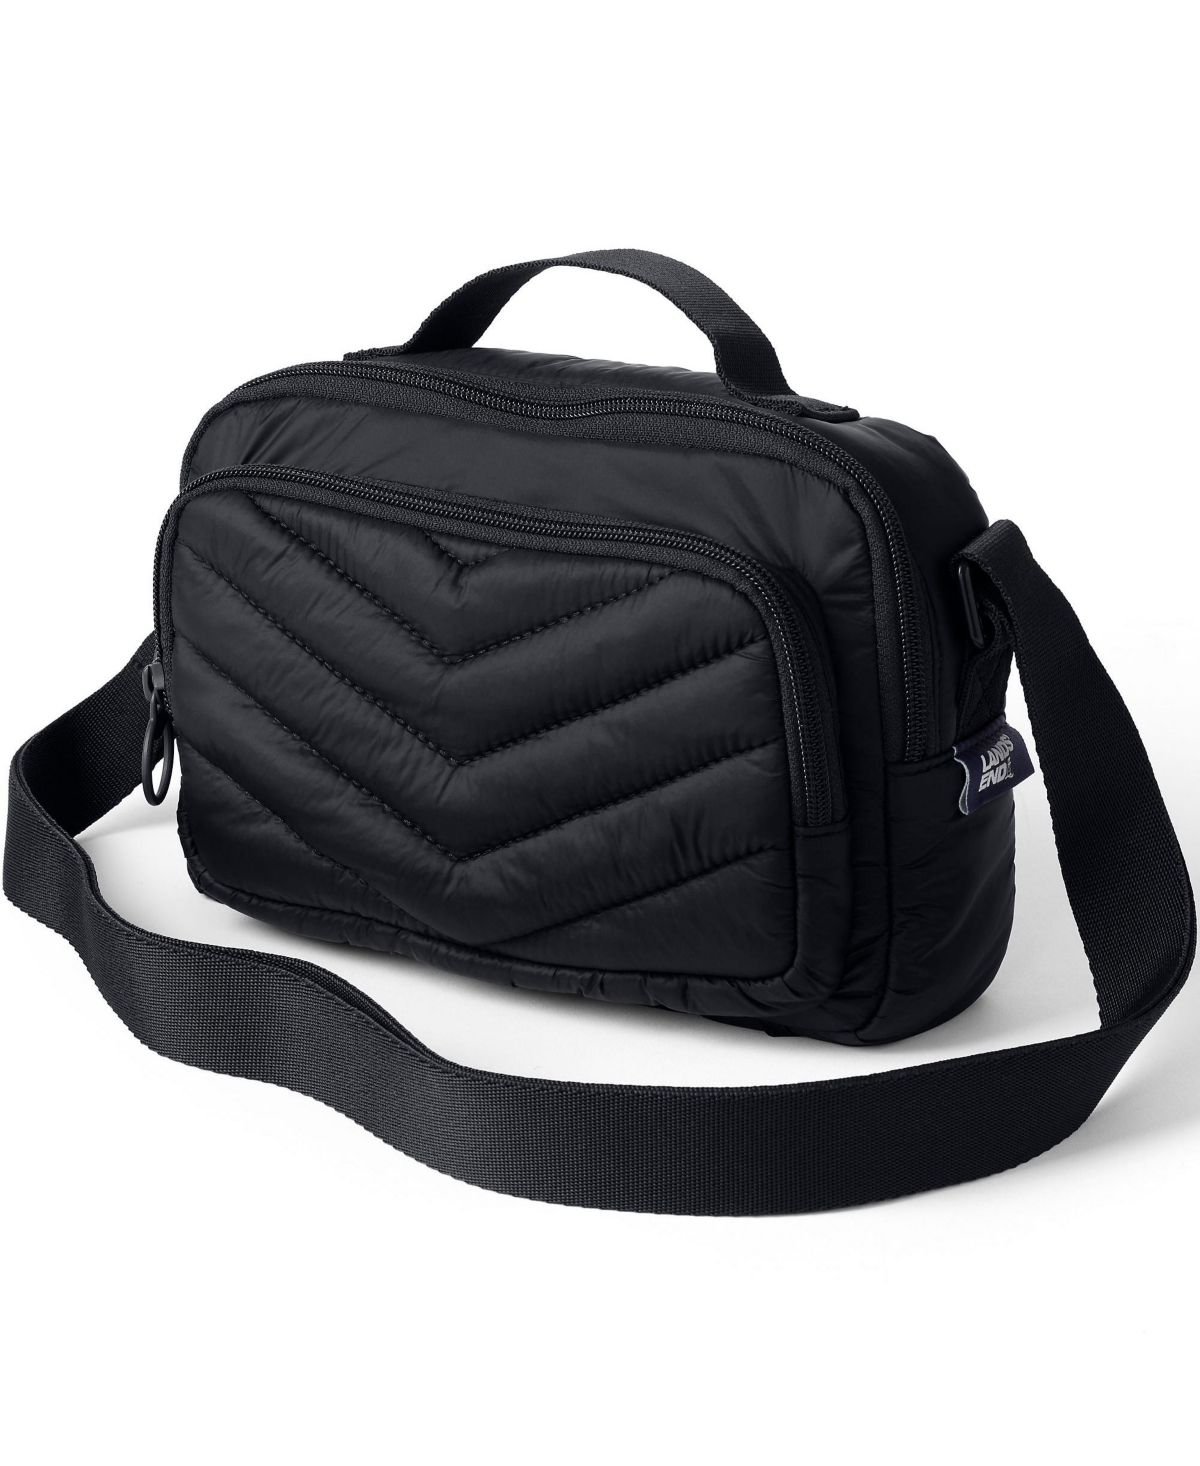 Ultralight Crossbody Bag - Black/black